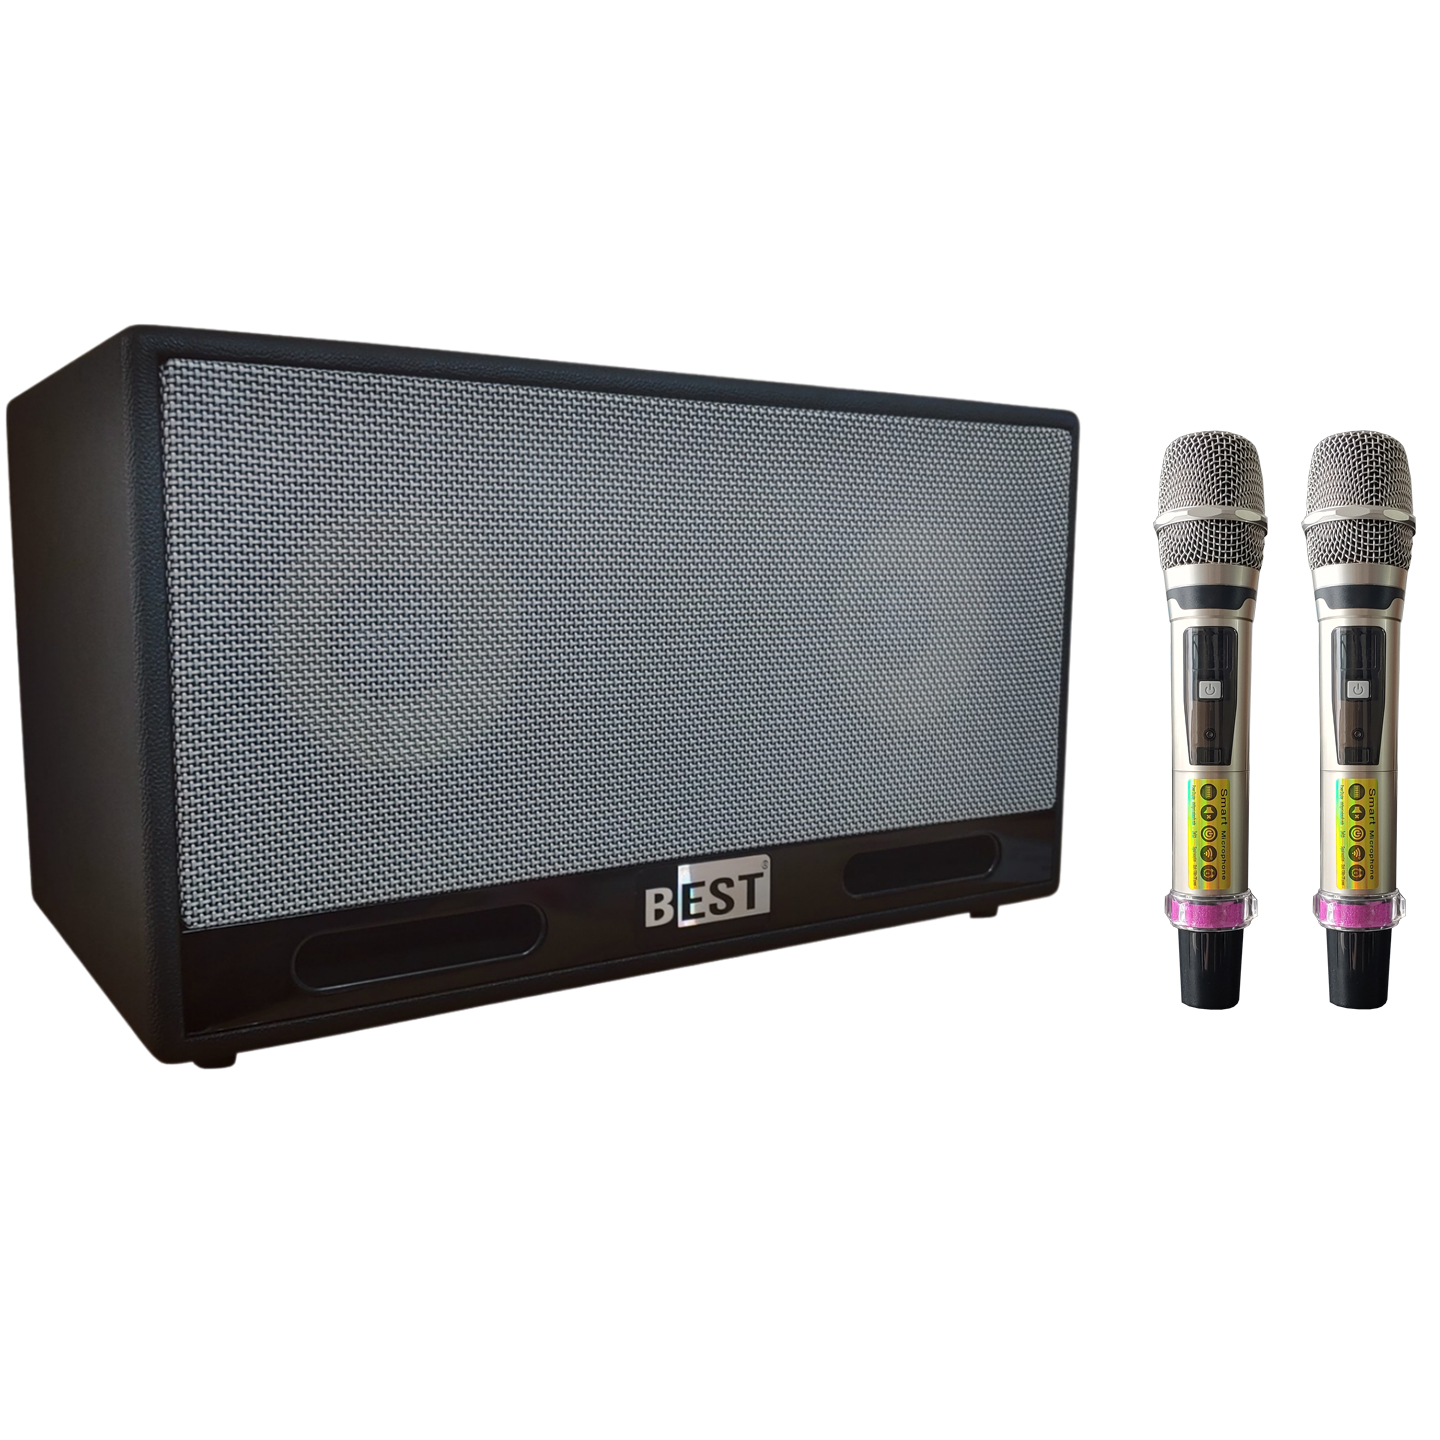 Lux 16V size mic 1 Best® Audio - Loa kéo made in Viet Nam | BestAudio.org